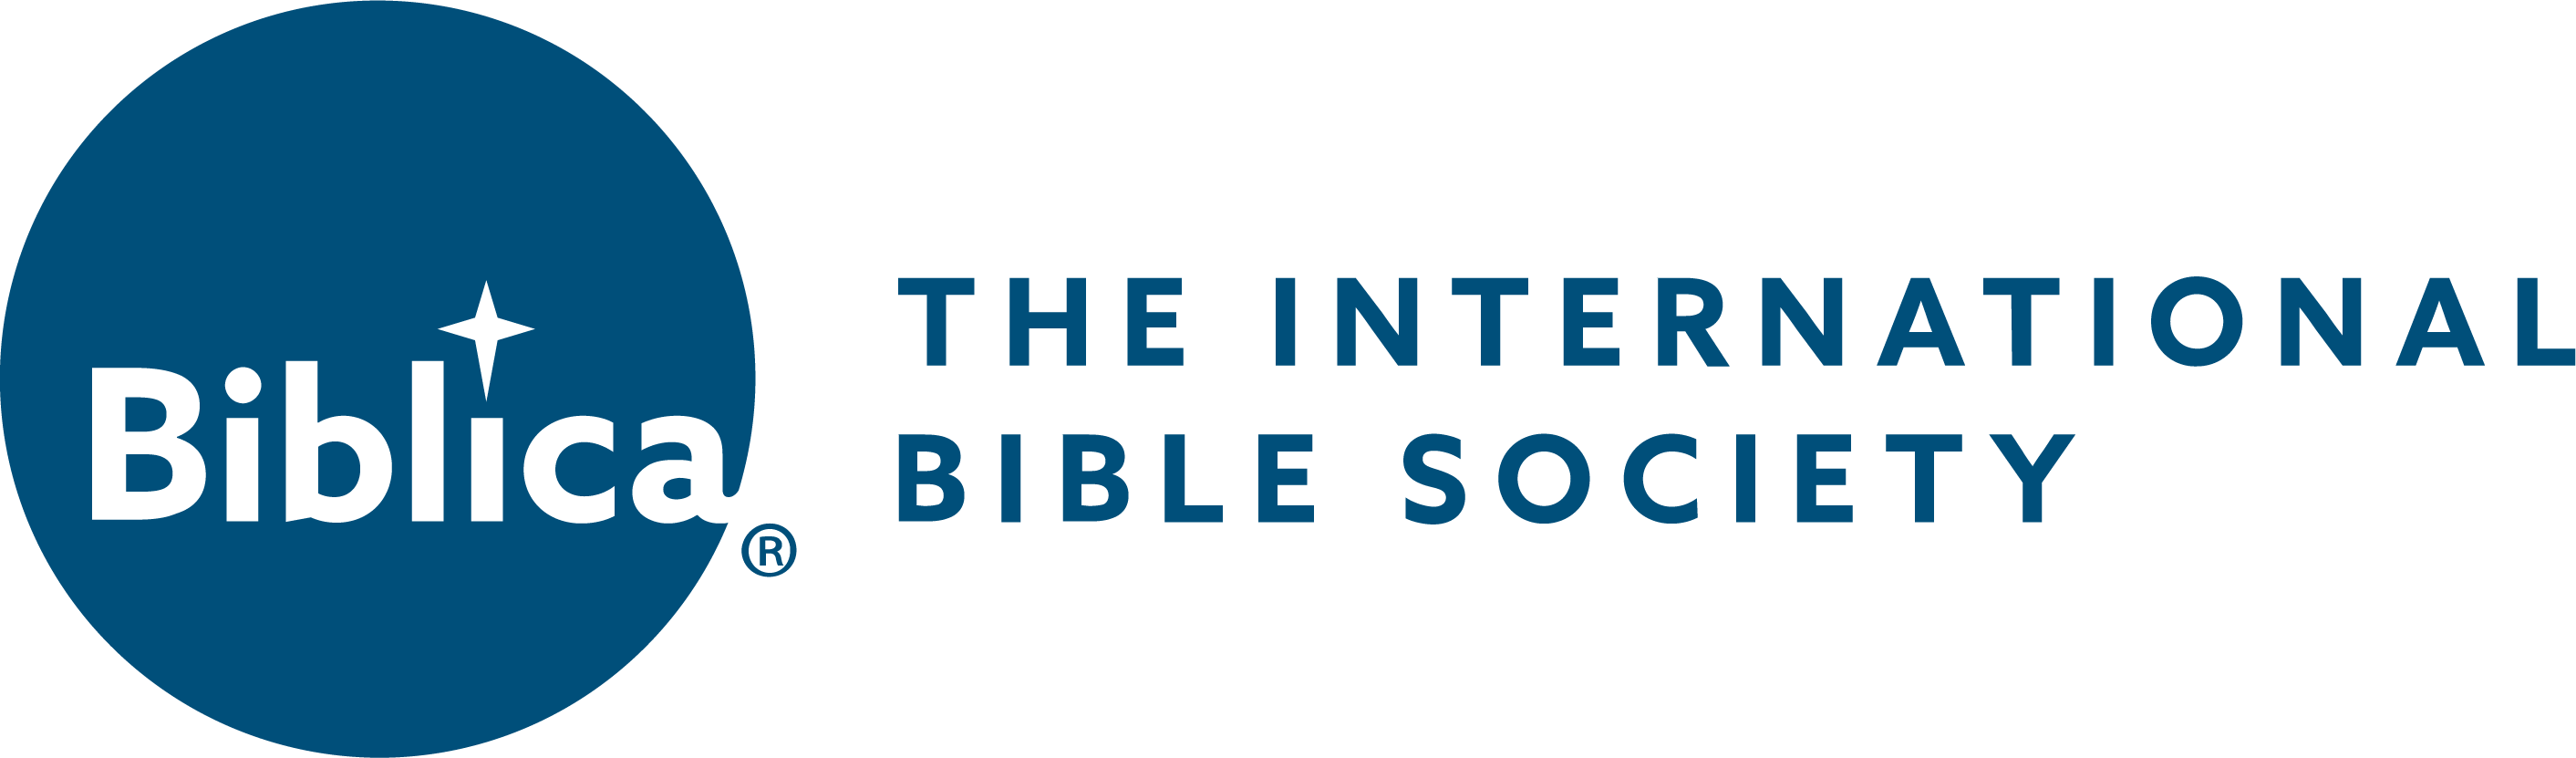 biblical logo